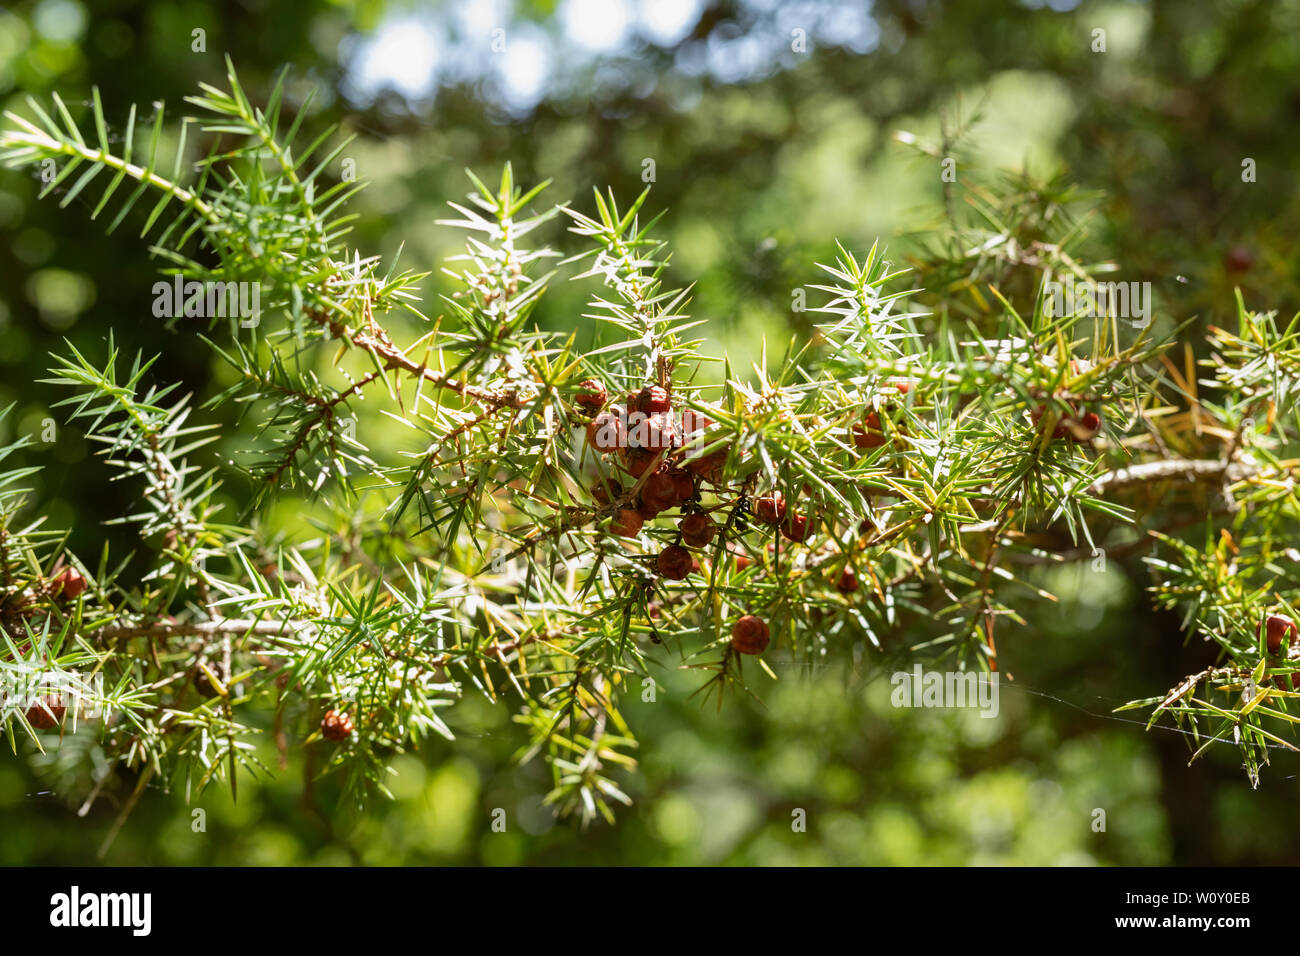 Branche de genévrier cade -juniperus oxycedrus ou épineuse, Juniper - Vert feuilles et cônes verts Banque D'Images